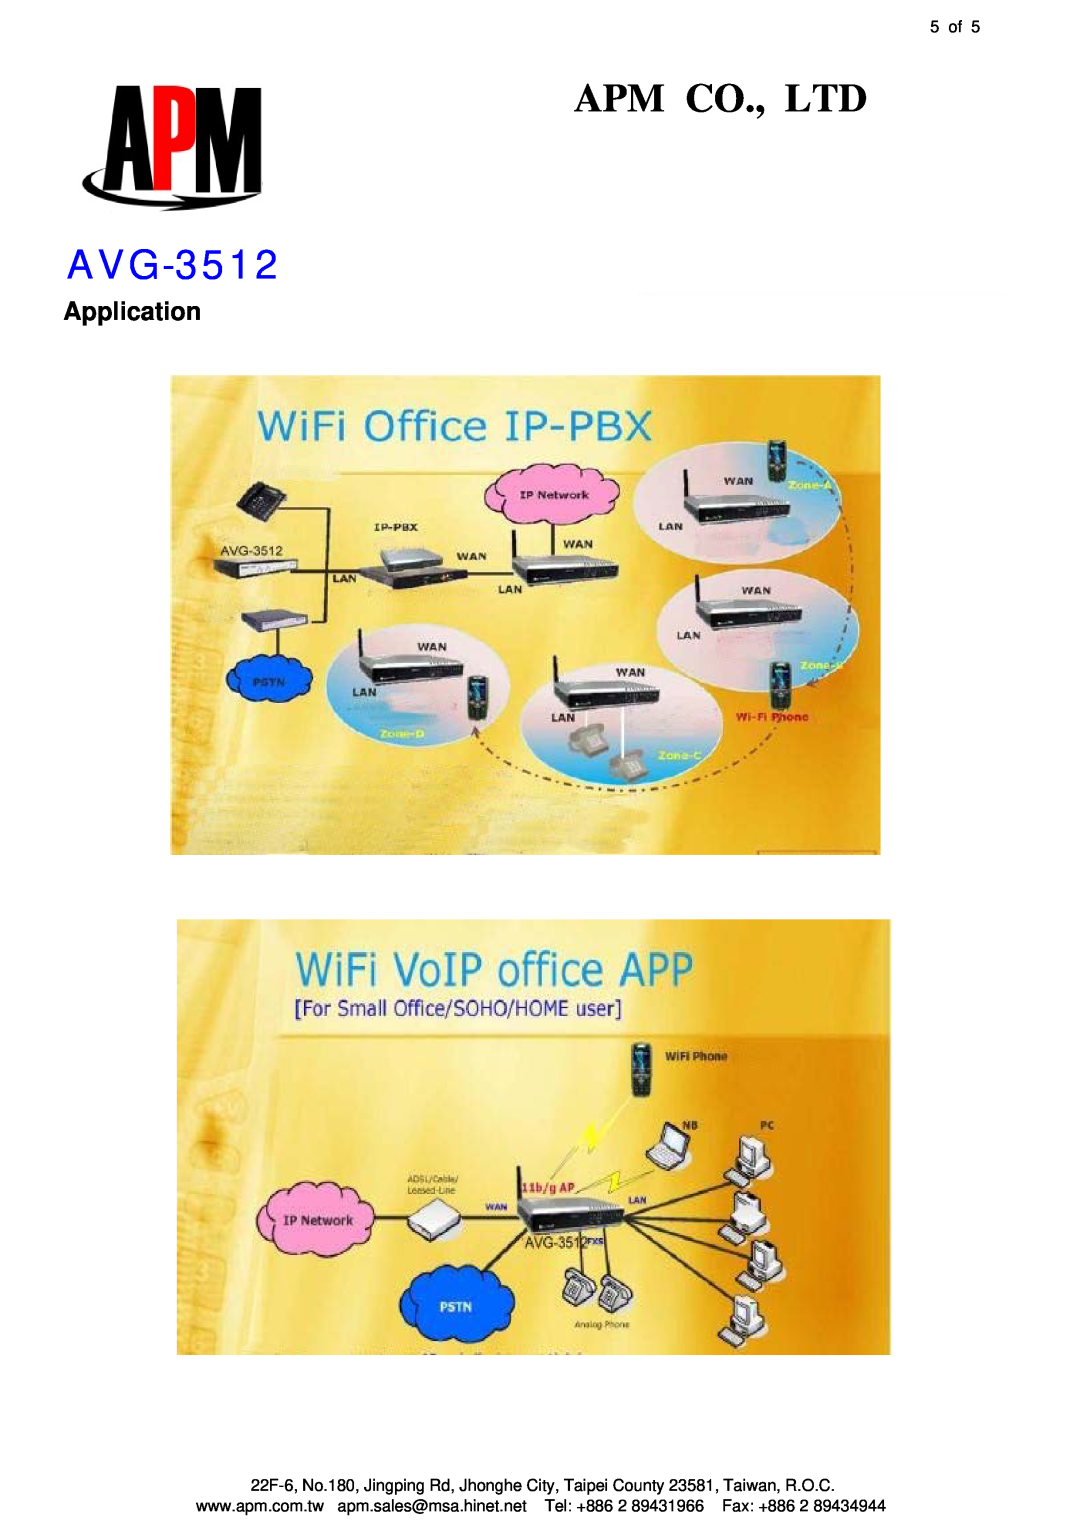 APM AVG-3512 manual Application, 5 of 